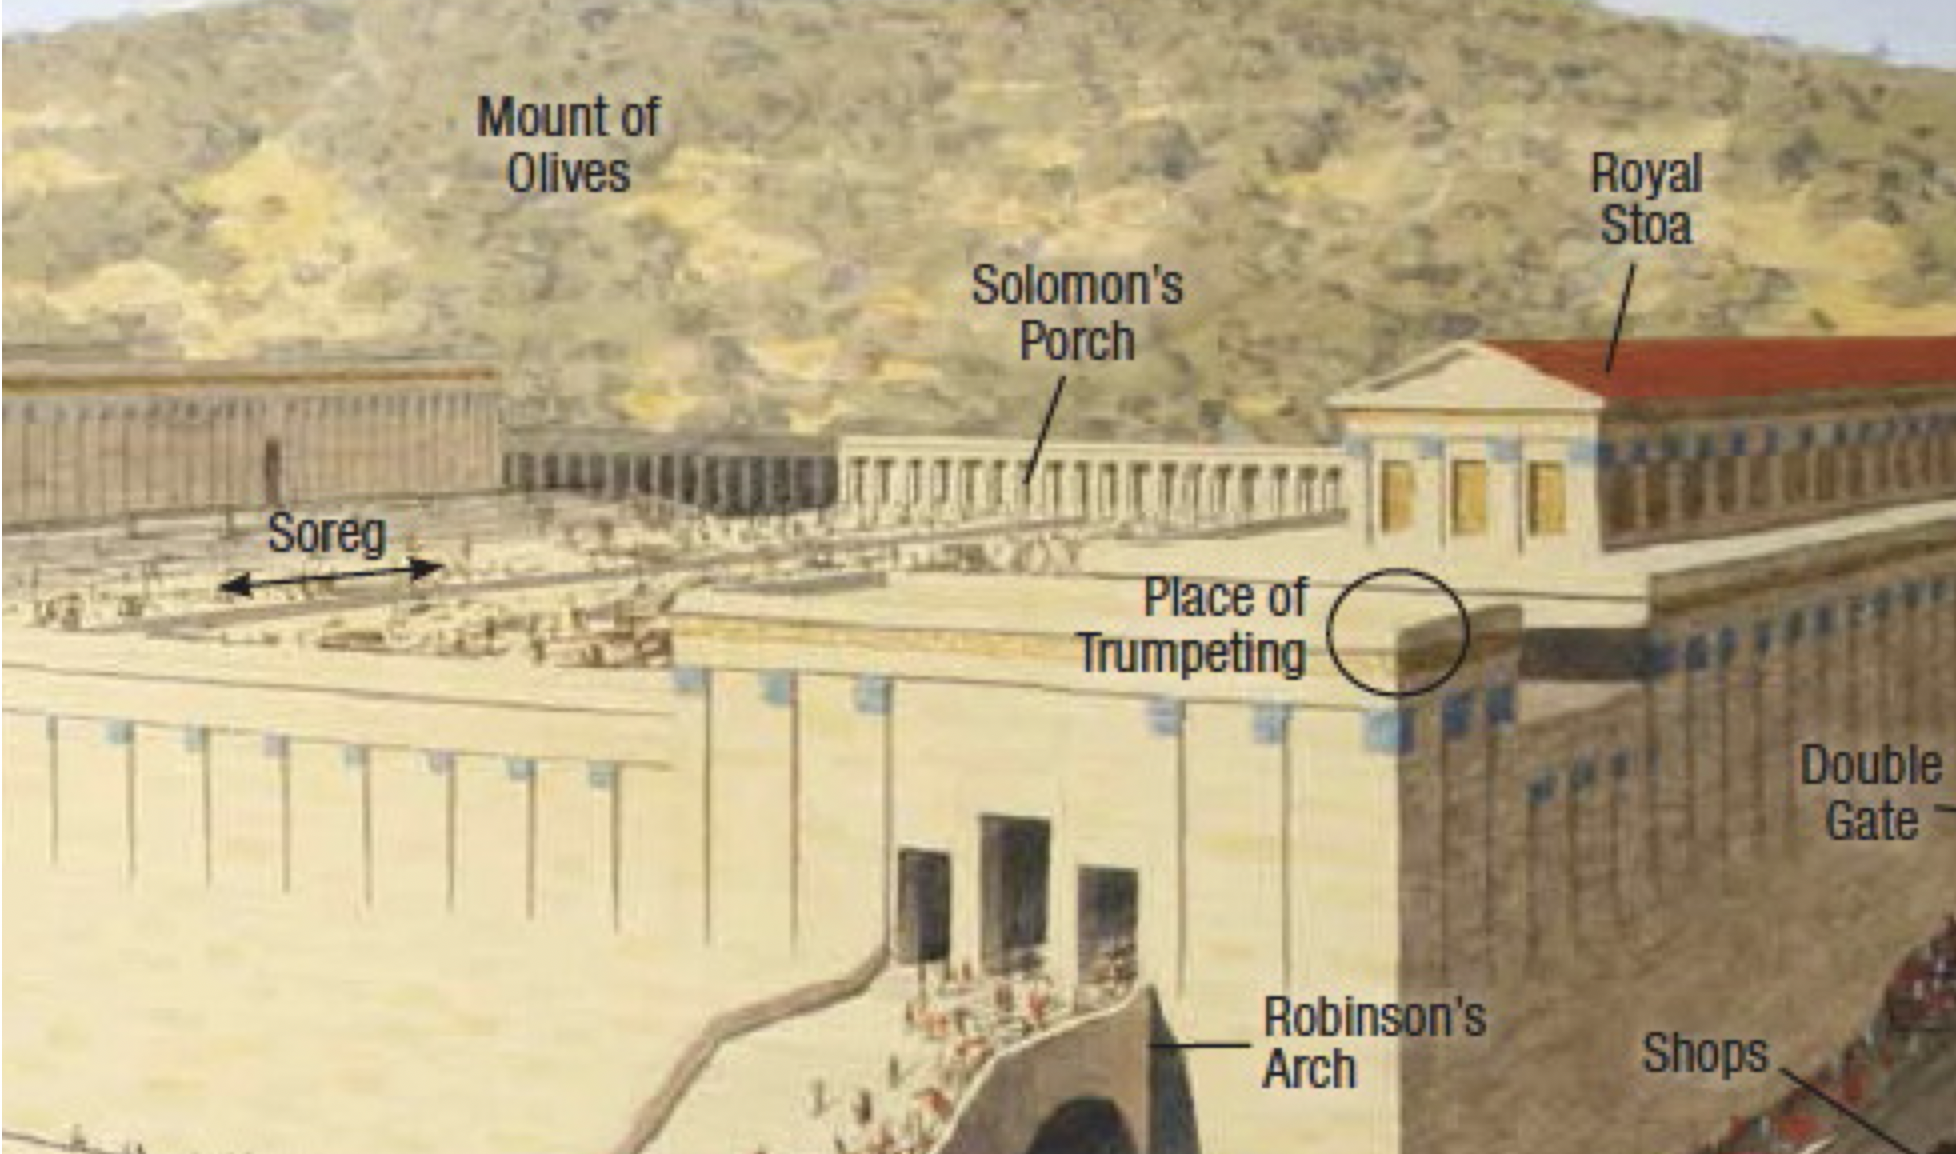 Jesus preached in the Temple precincts, including Solomon's Portico.